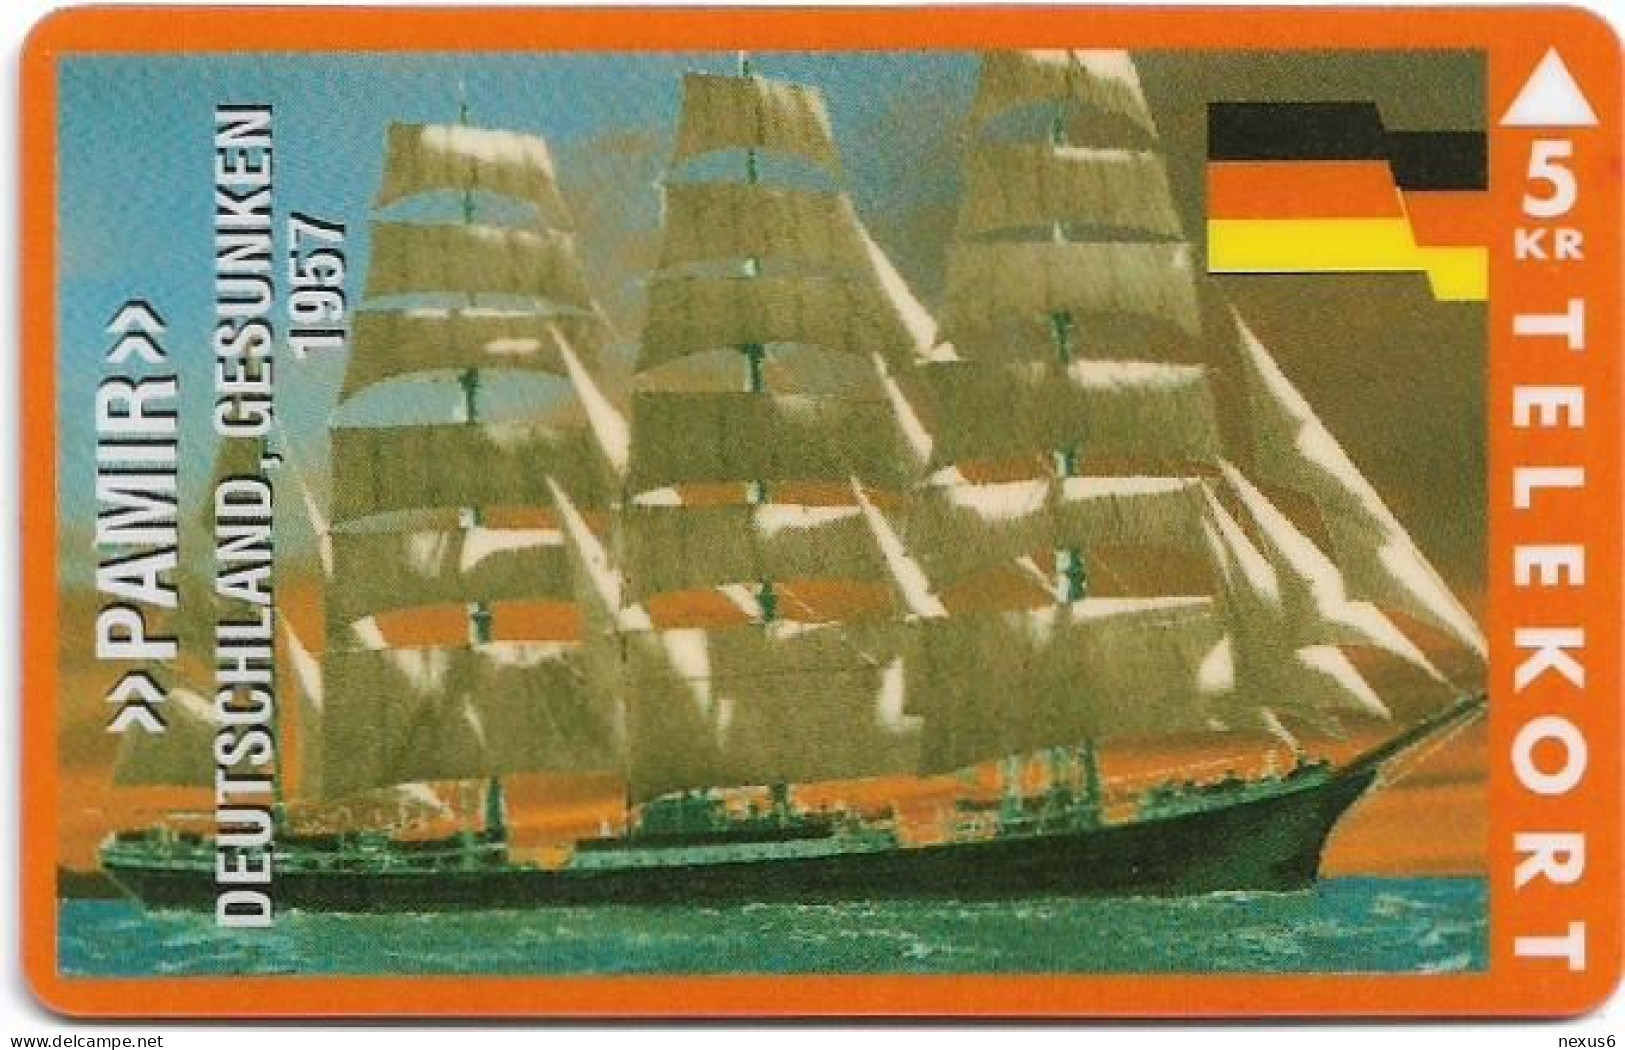 Denmark - KTAS - Ships (Red) - Germany - Pamir - TDKP136 - 03.1995, 5kr, 1.500ex, Used - Denemarken